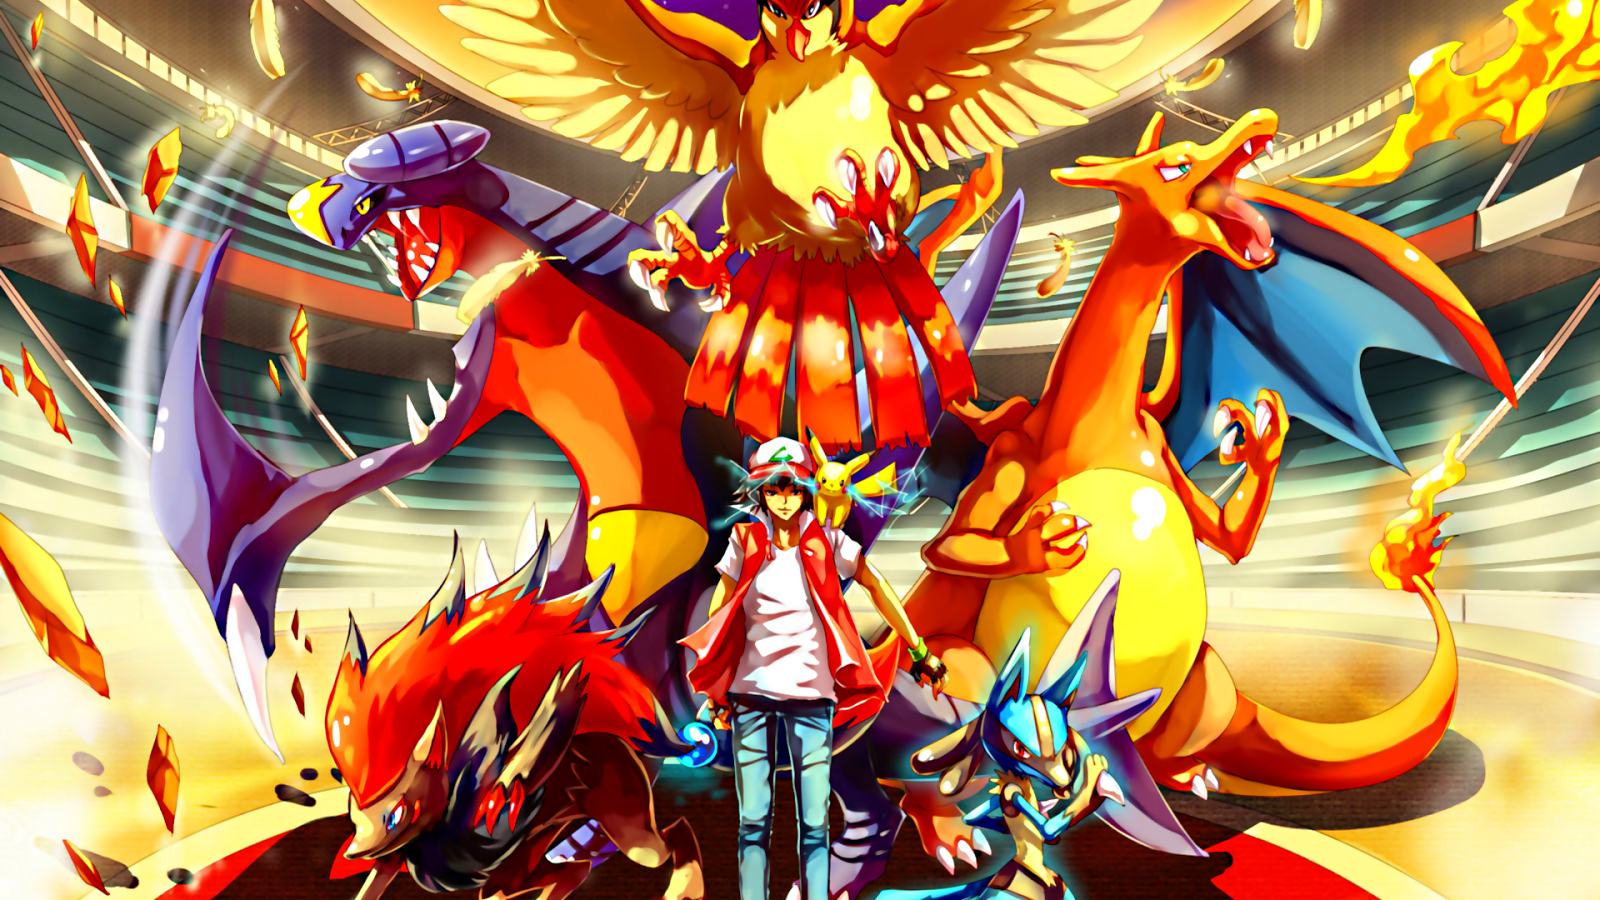 Team red. Cool pokemon wallpaper, Pikachu wallpaper, Pokemon image